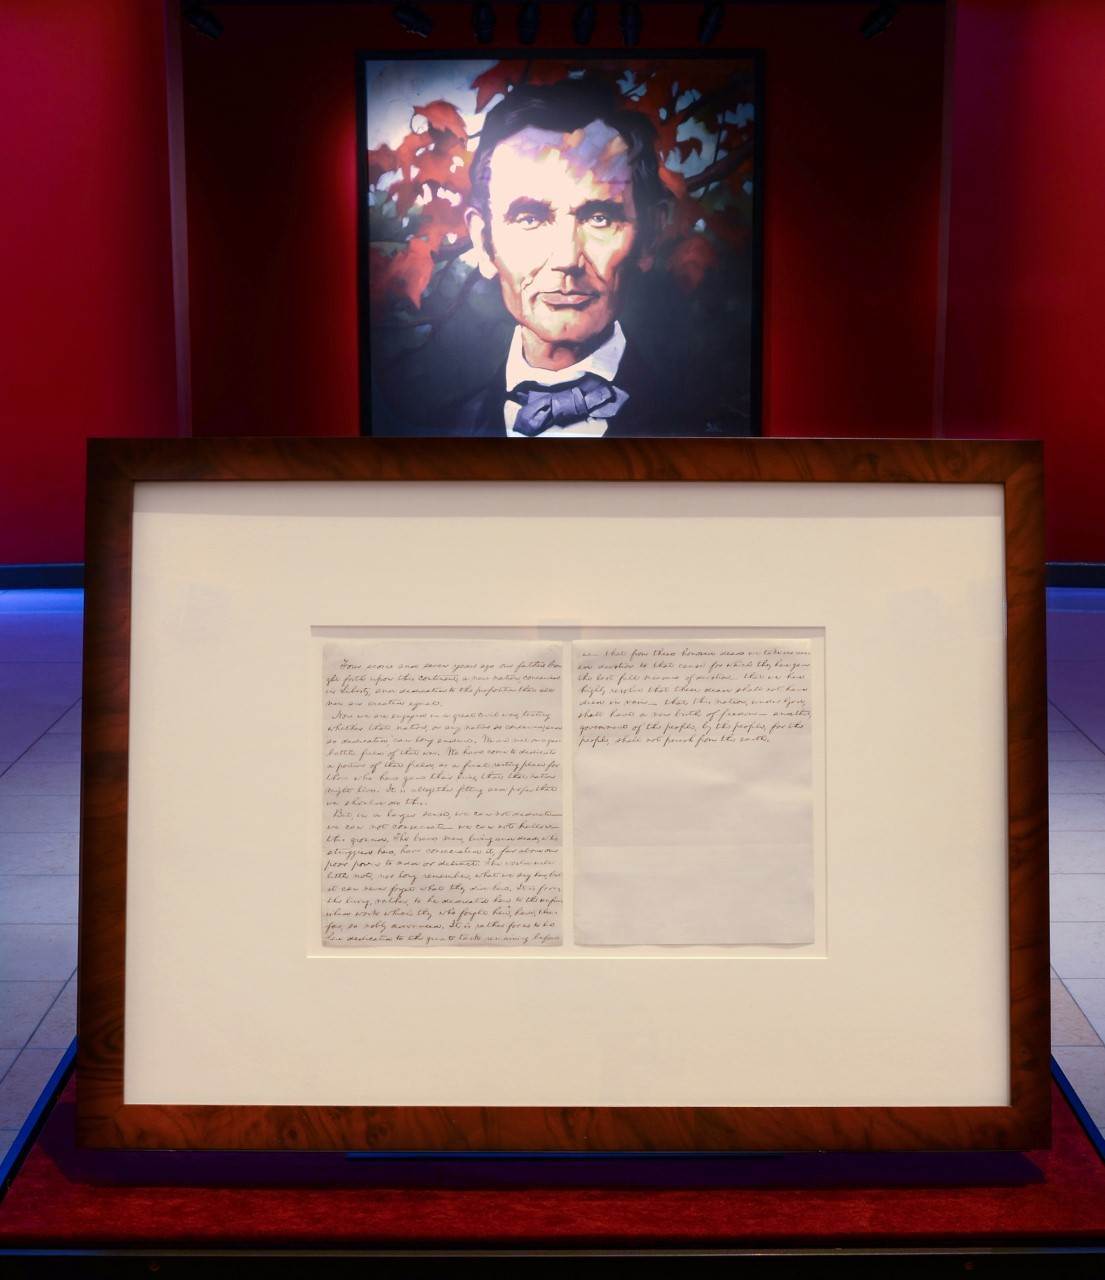 The Everett Copy of the Gettysburg Address